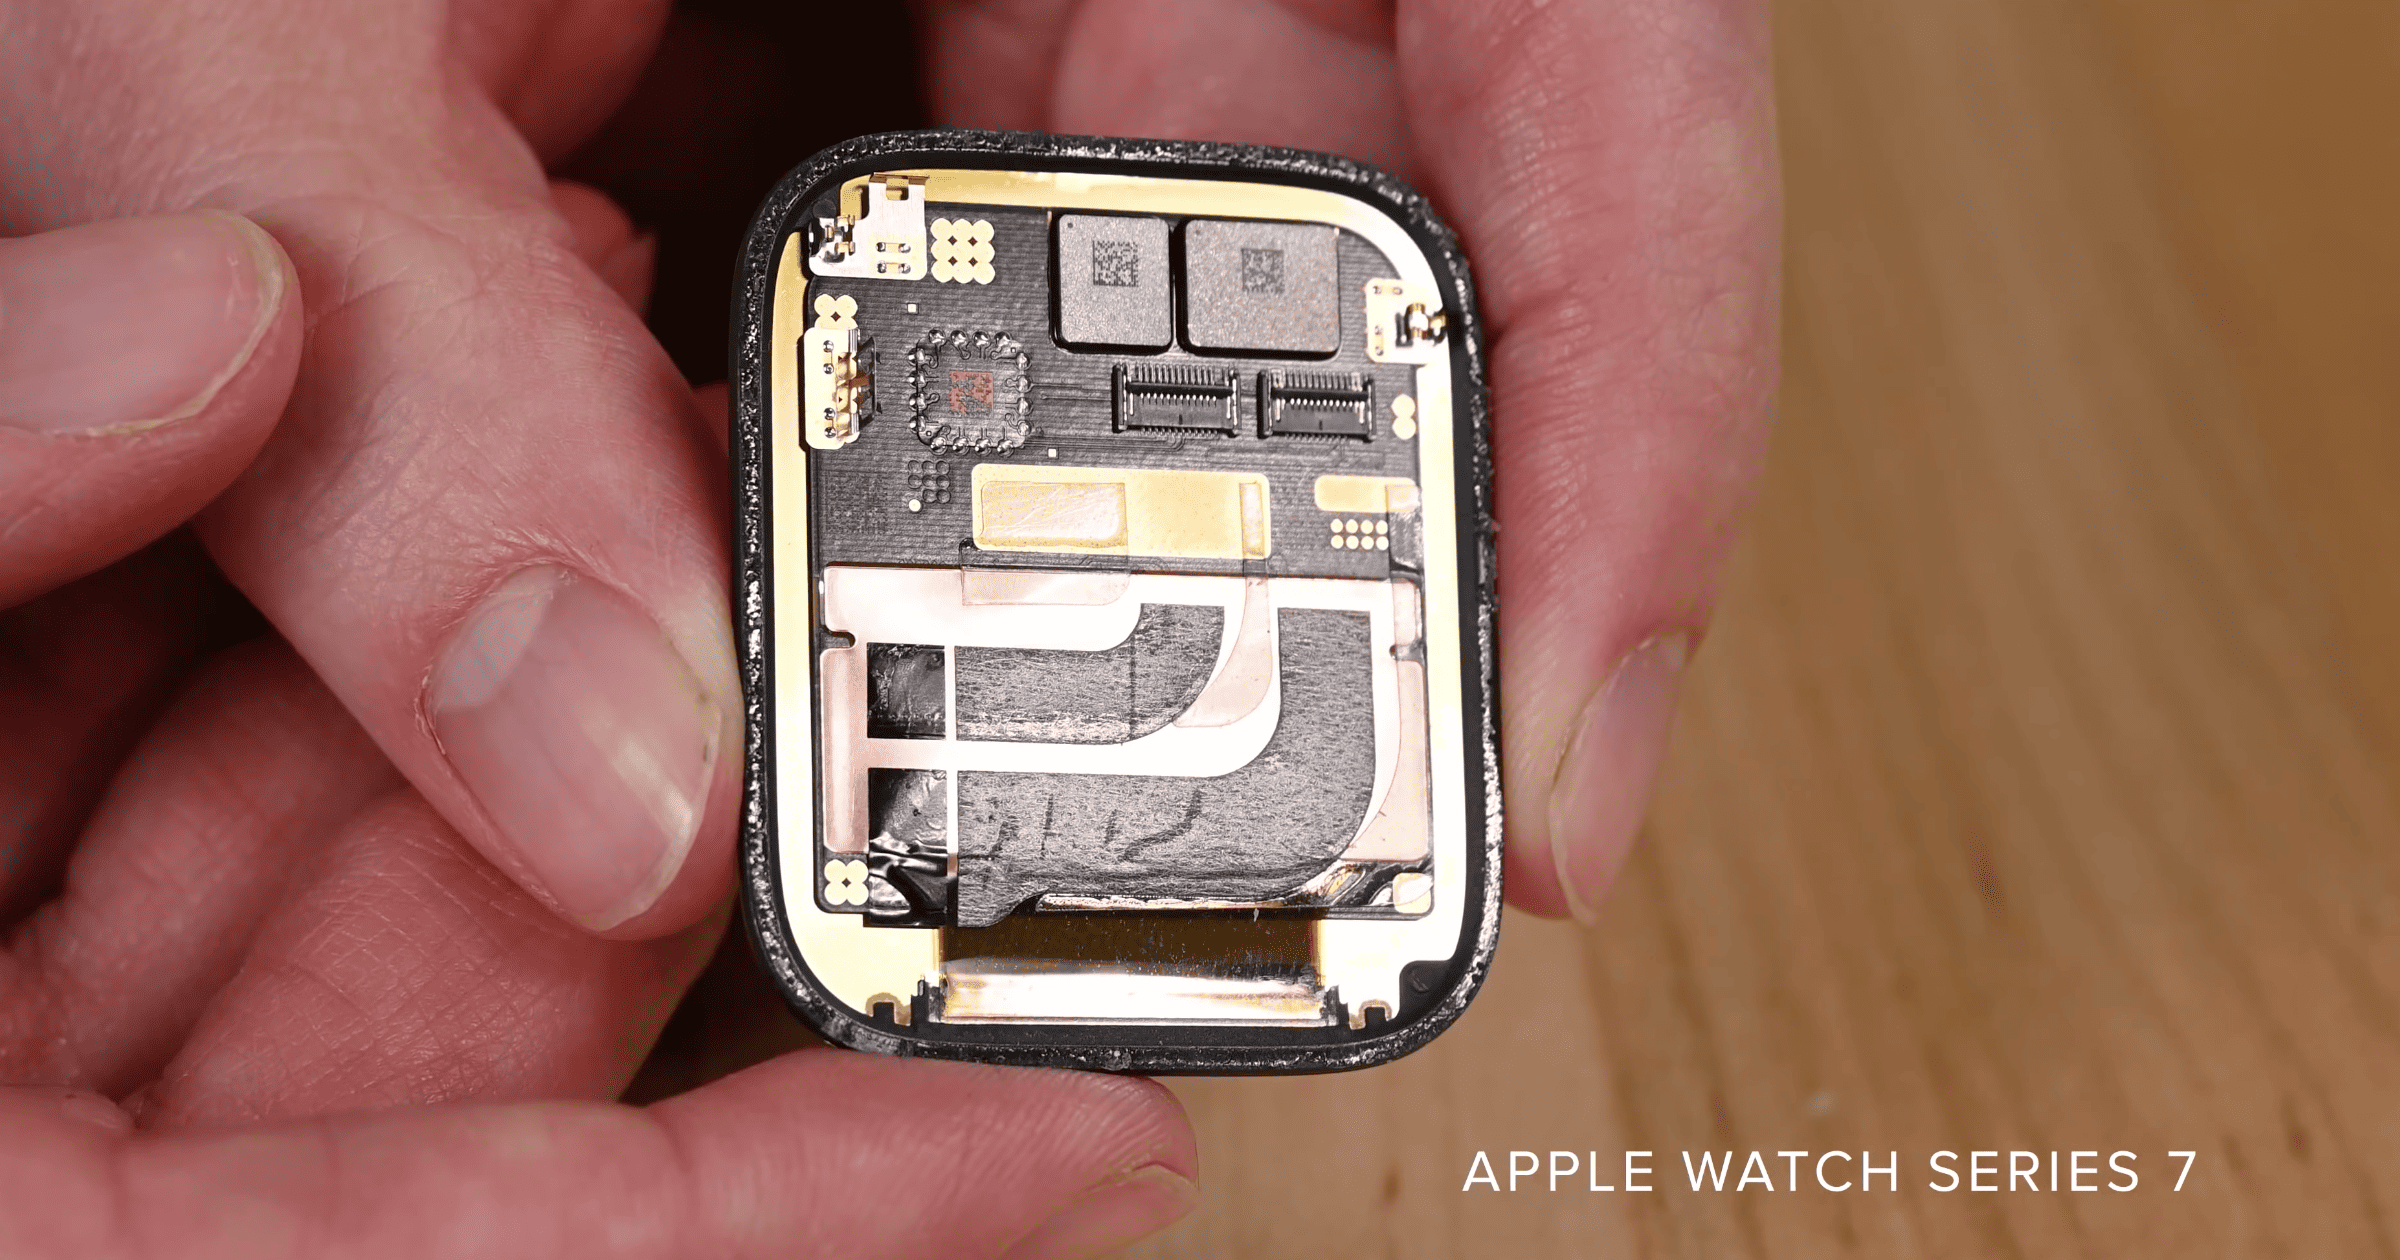 Teardown Reveals Why Apple Watch Series 7 Faced Delays